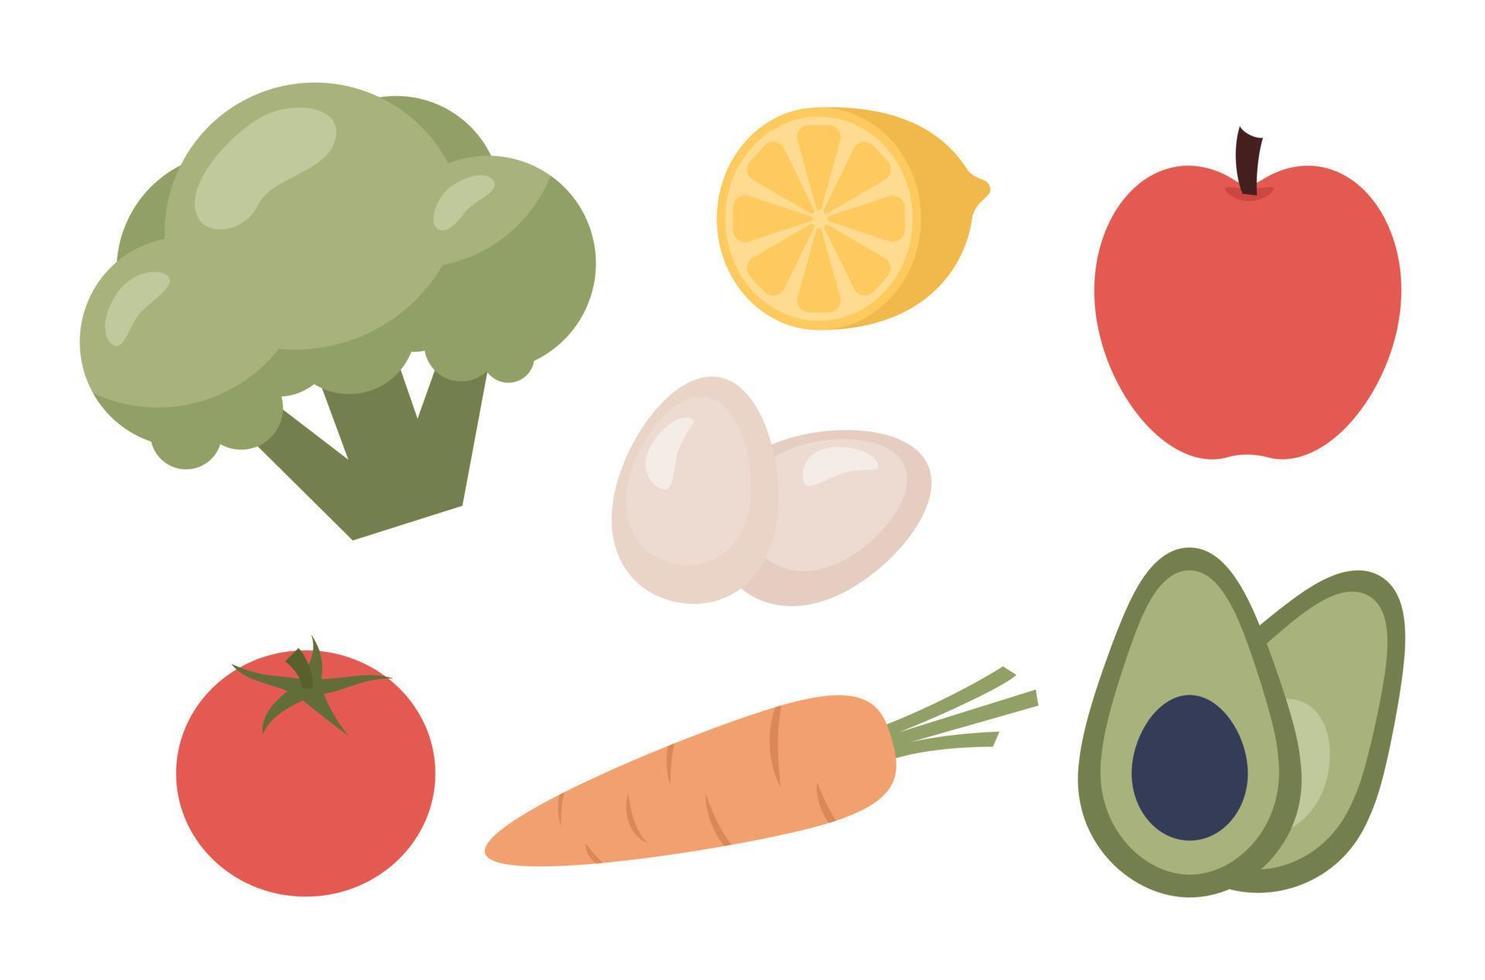 Healthy food set icons. Broccoli, avocado, tomato, eggs, carrot, apple, lemon. Vector flat illustration